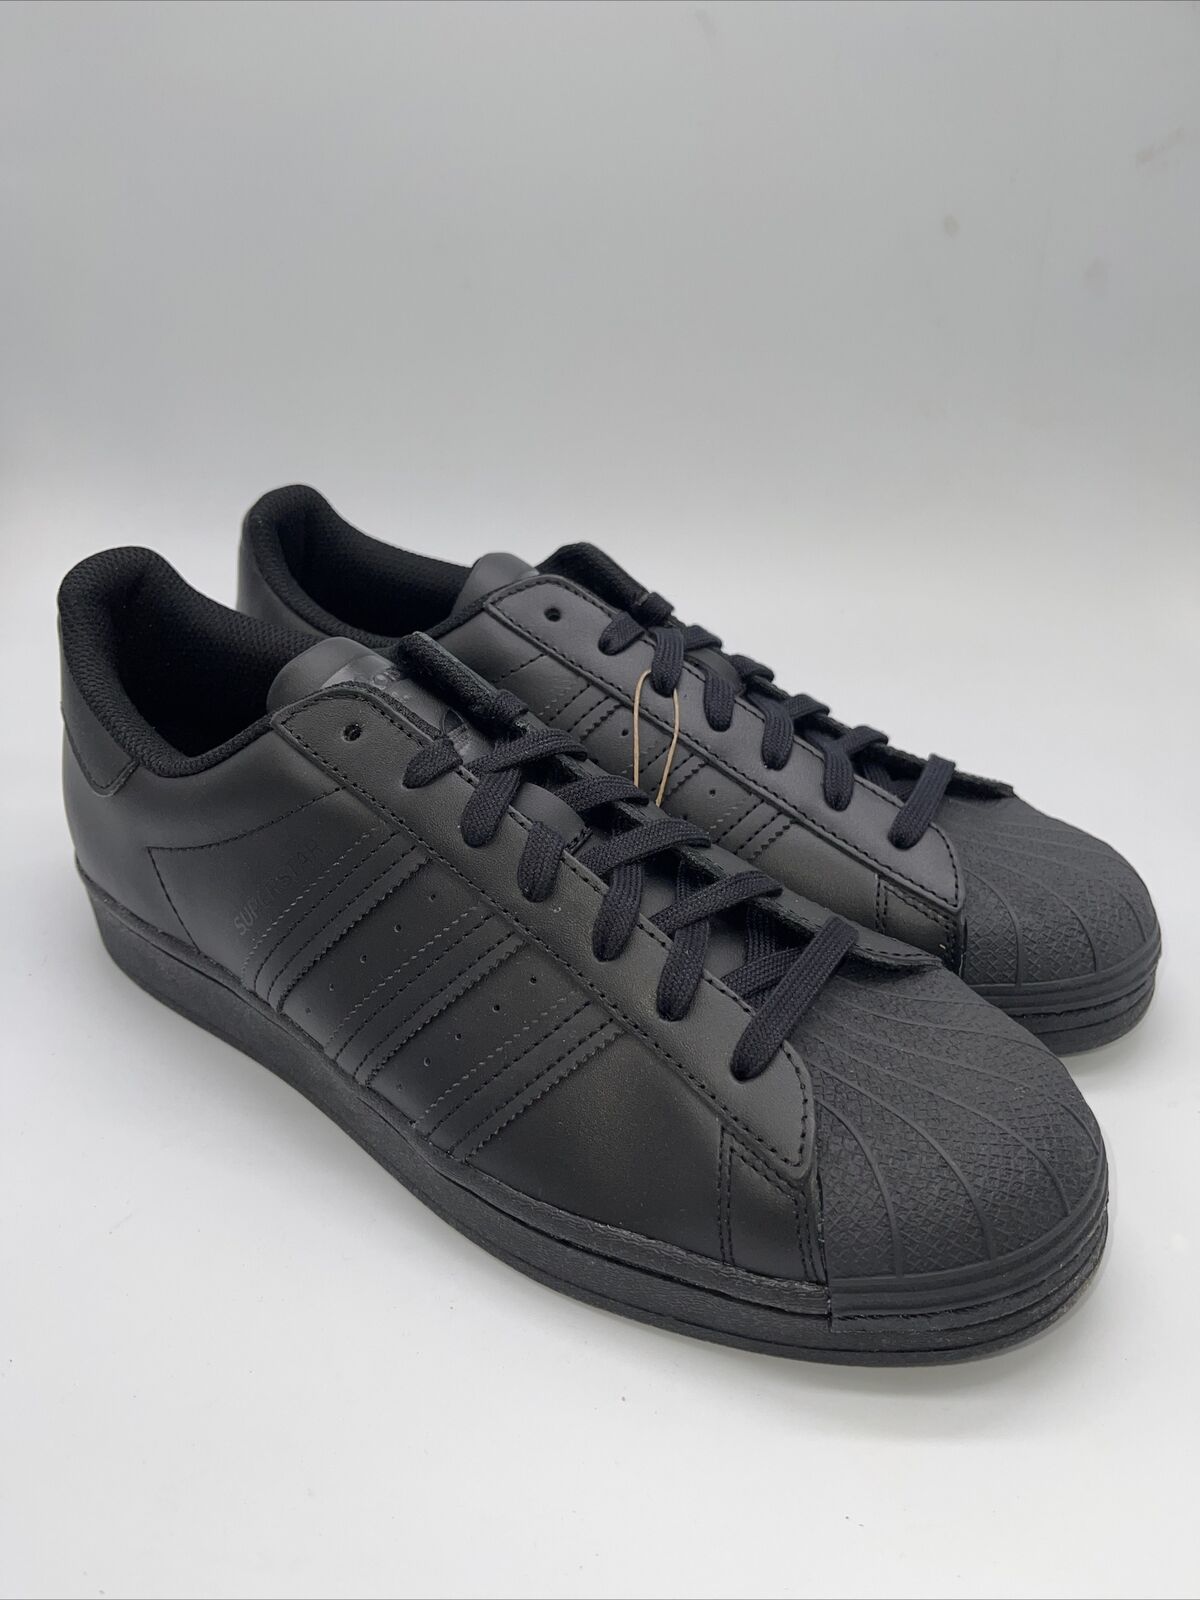 adidas Superstar All Black Sizes 9.5-11 | eBay